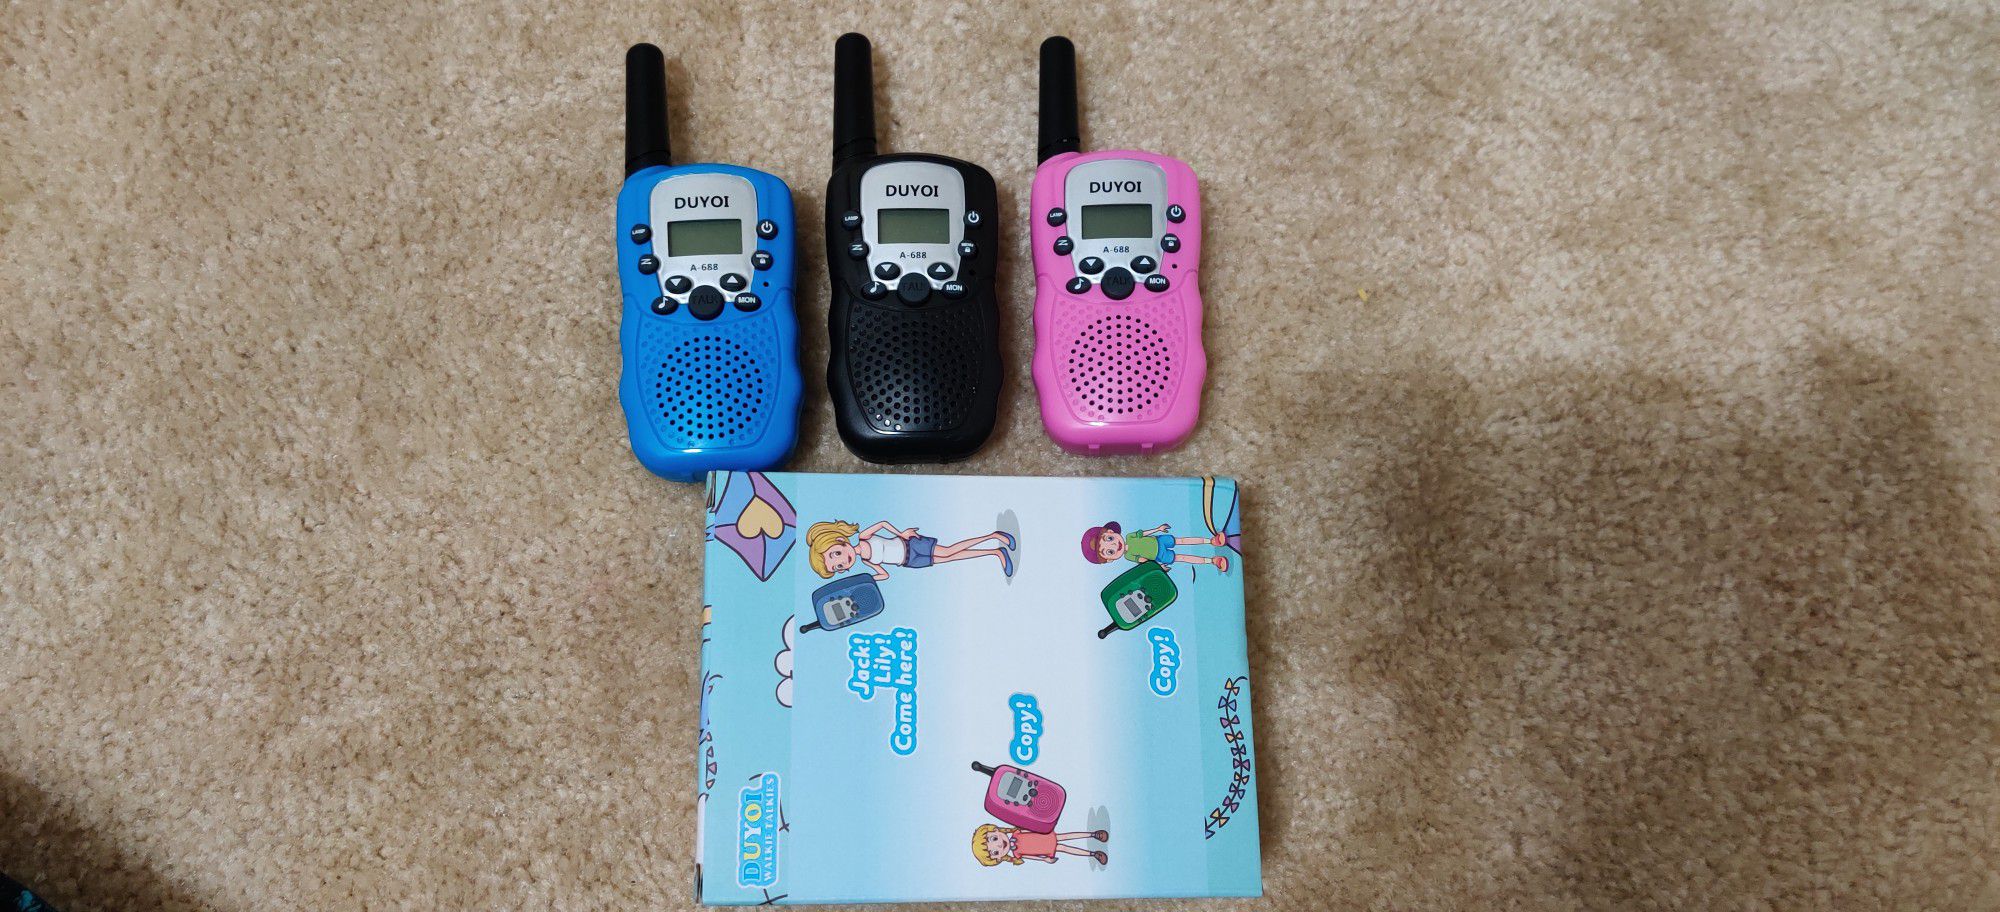 Walkie Talkies, Duyoi Kids 3 Packs 3 Miles Range with LCD Screen Flashlight Walkie Talkies for kids Toy Camping Hiking Outdoor Adventures